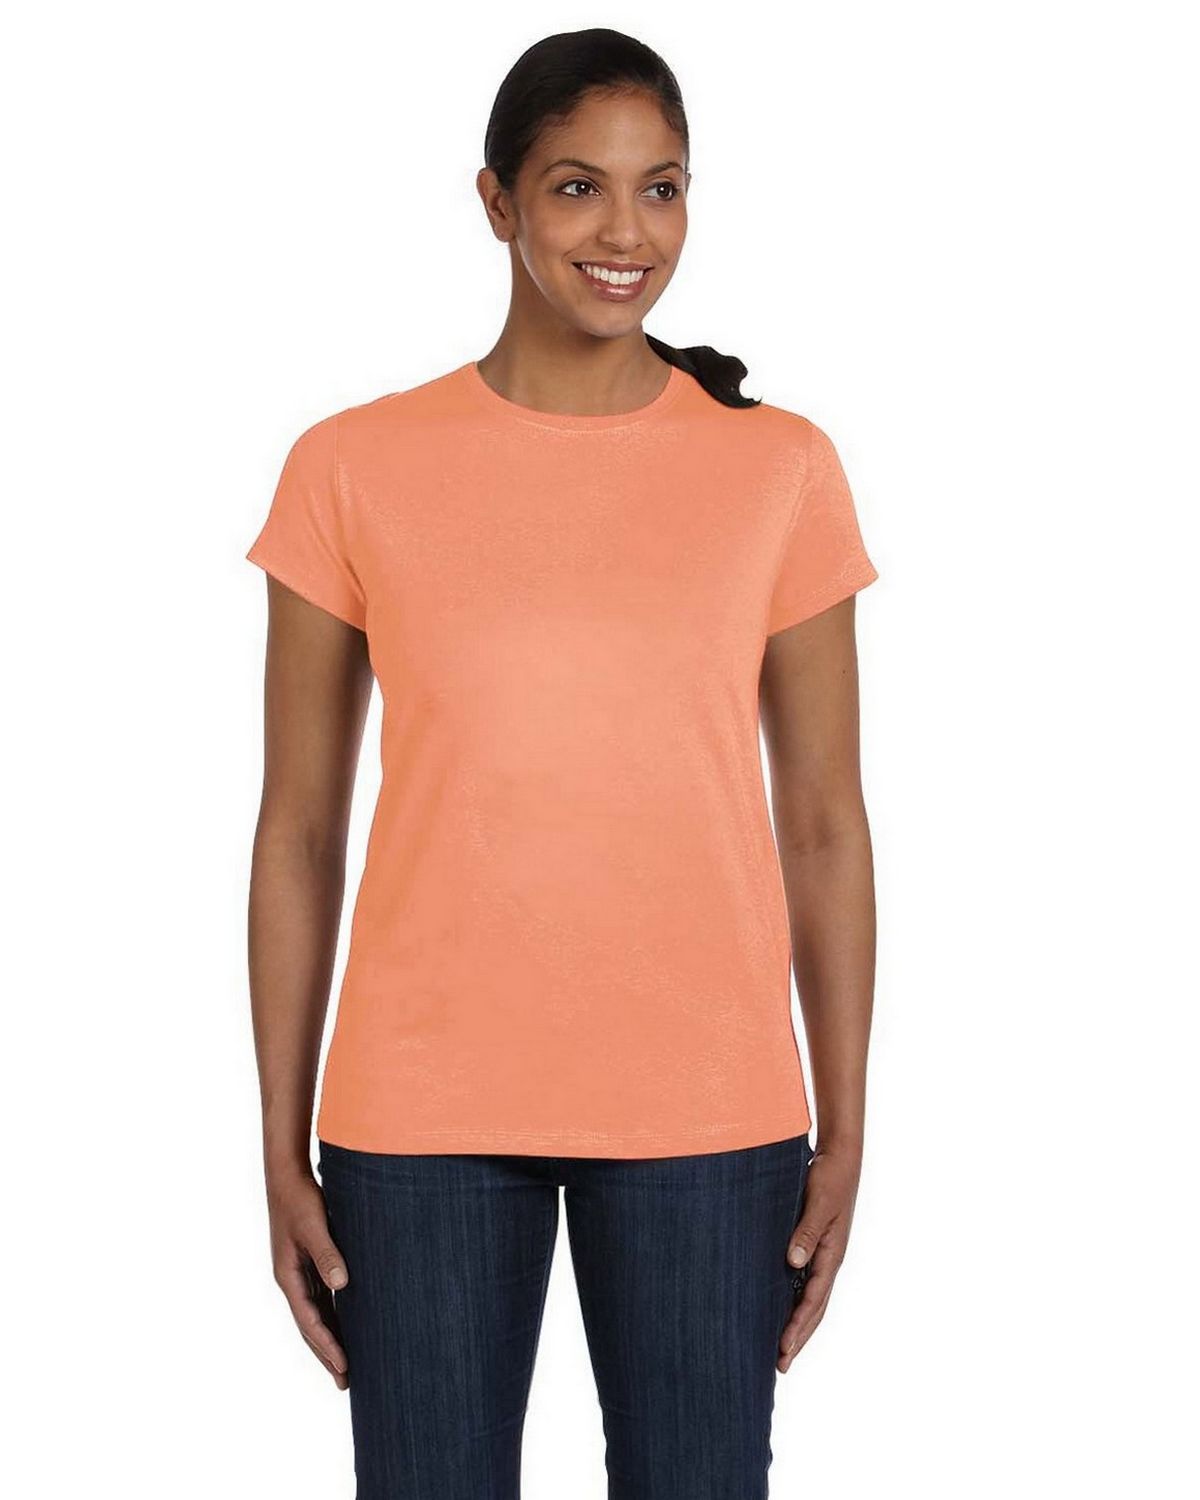 Hanes 5680 Ladies ComfortSoft Cotton T Shirt - ApparelnBags.com